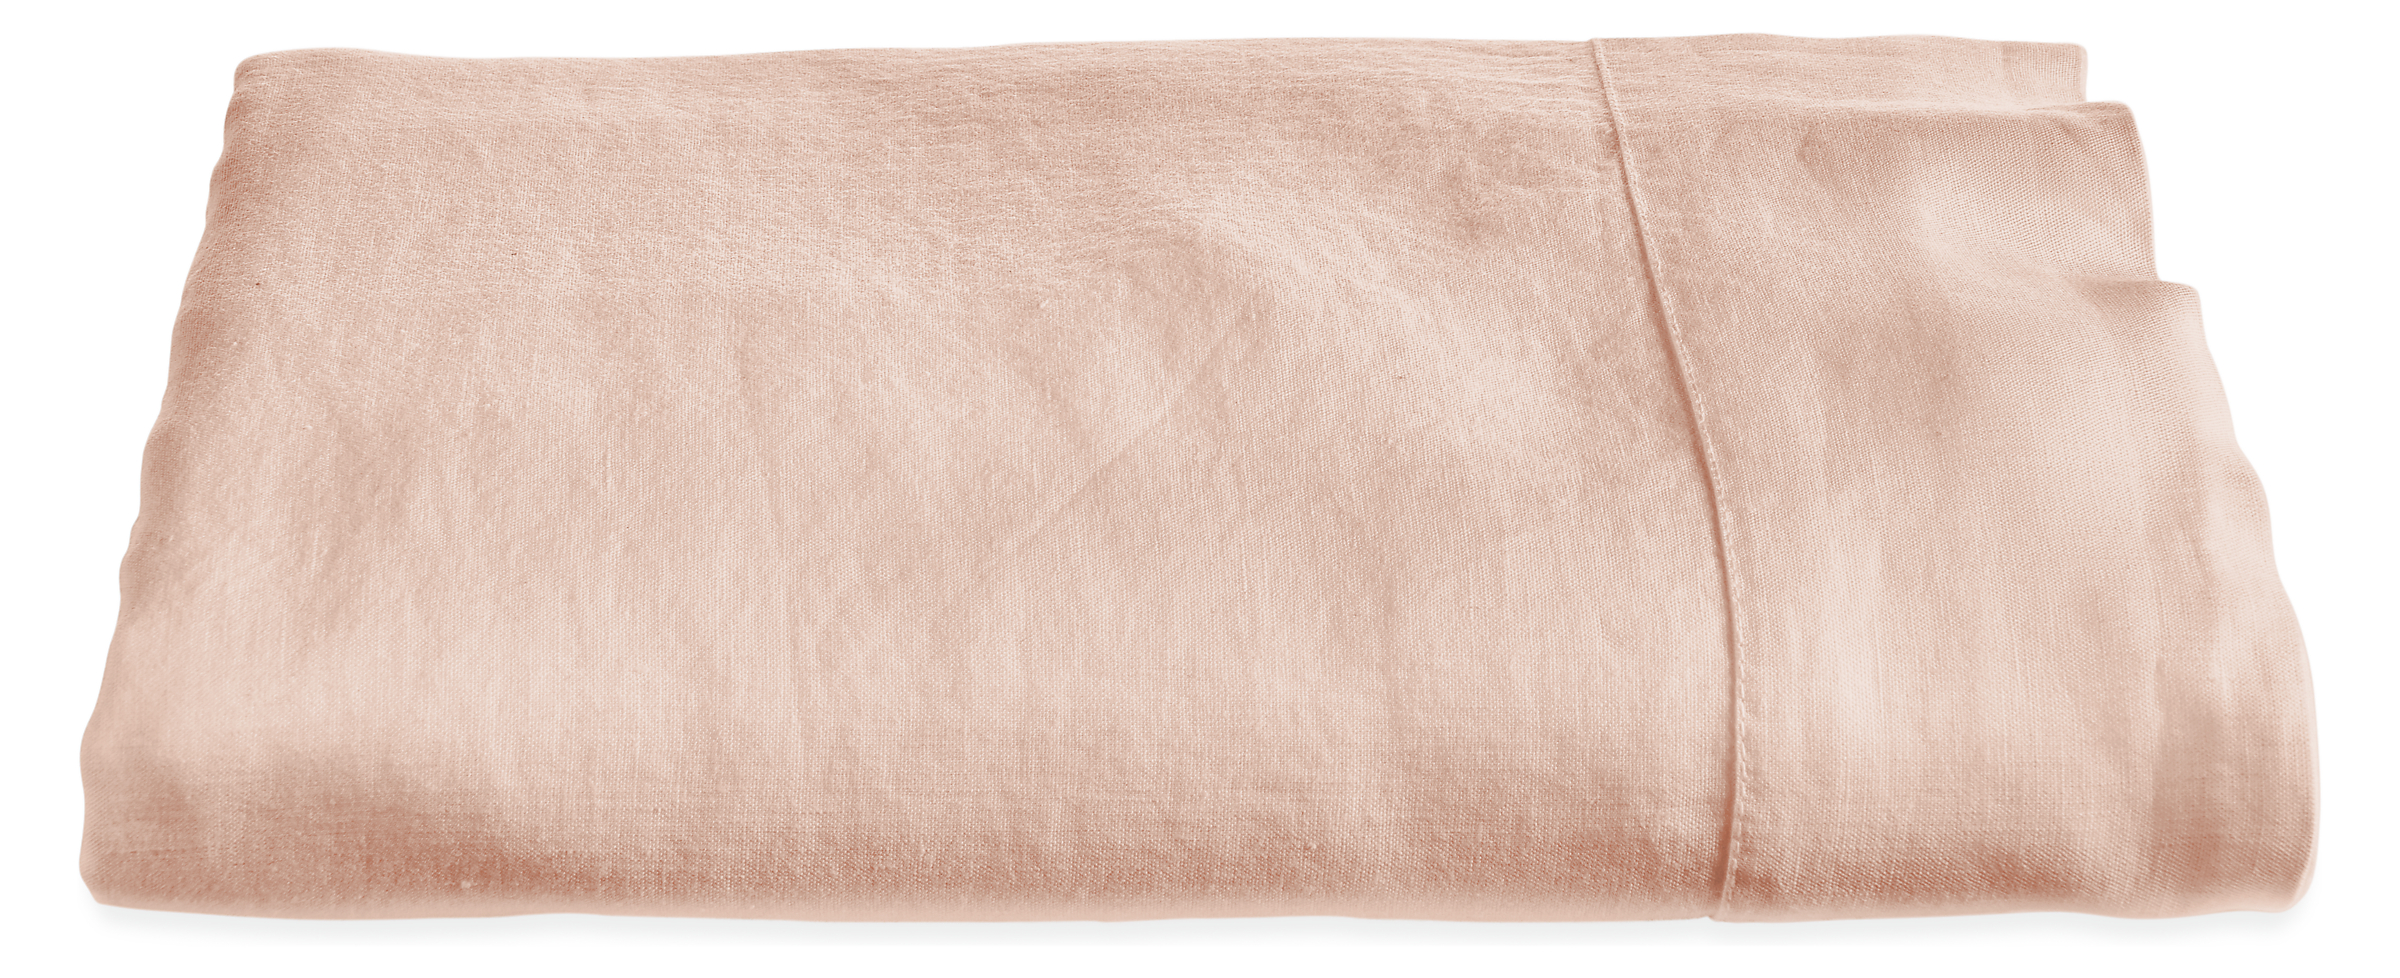 Relaxed Linen King Flat Sheet in Rose